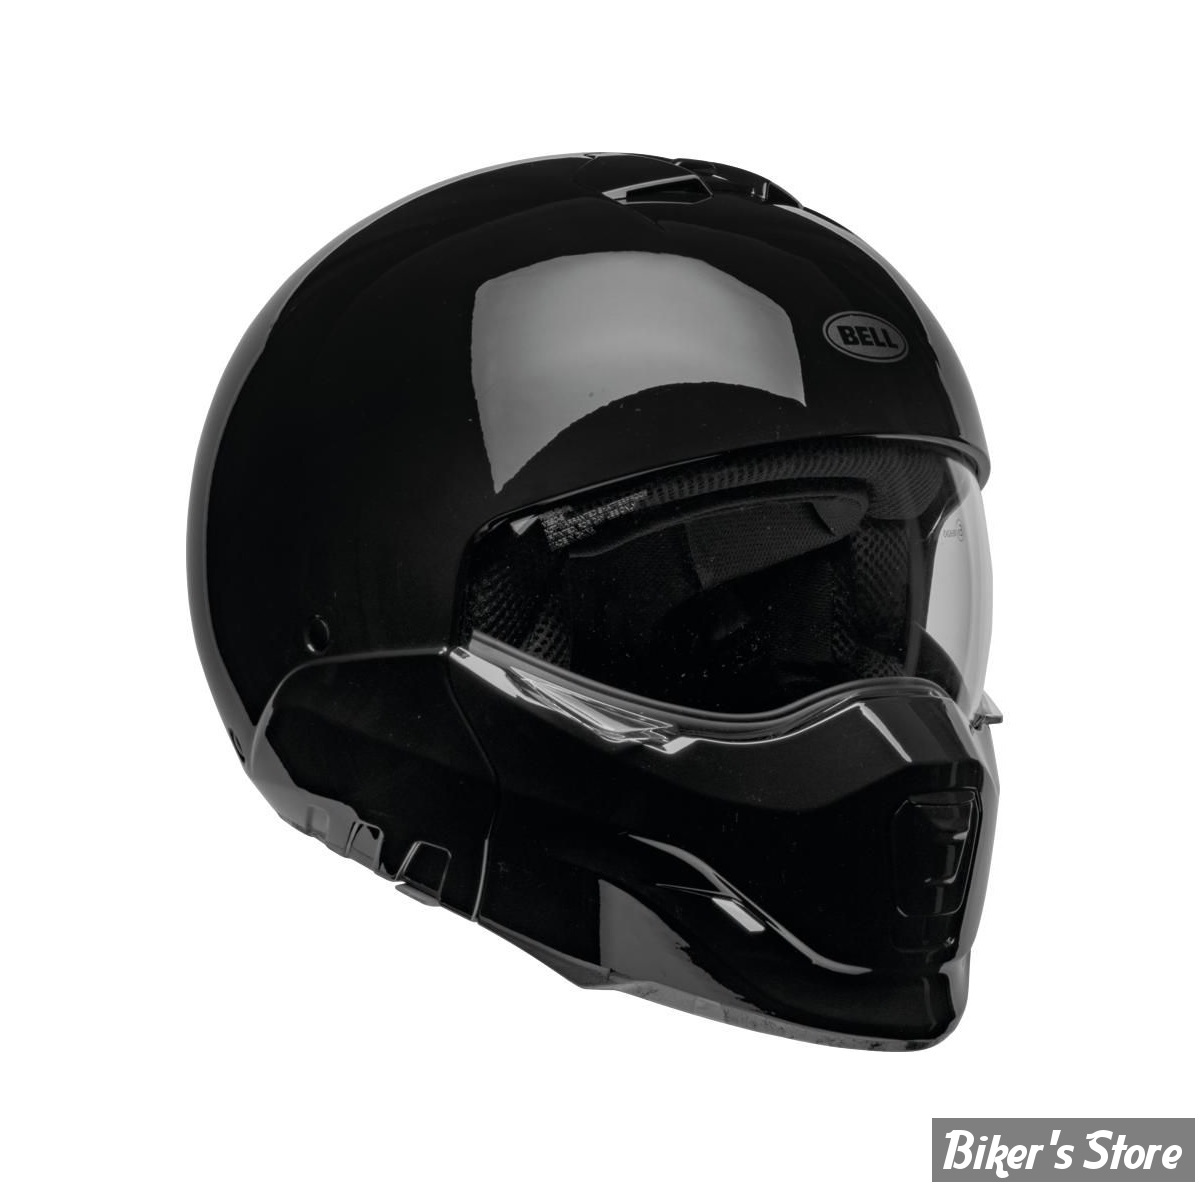 - CASQUE BELL - Broozer Modular Helmet - CONVERTIBLE - COULEUR : NOIR BRILLANT - TAILLE : L